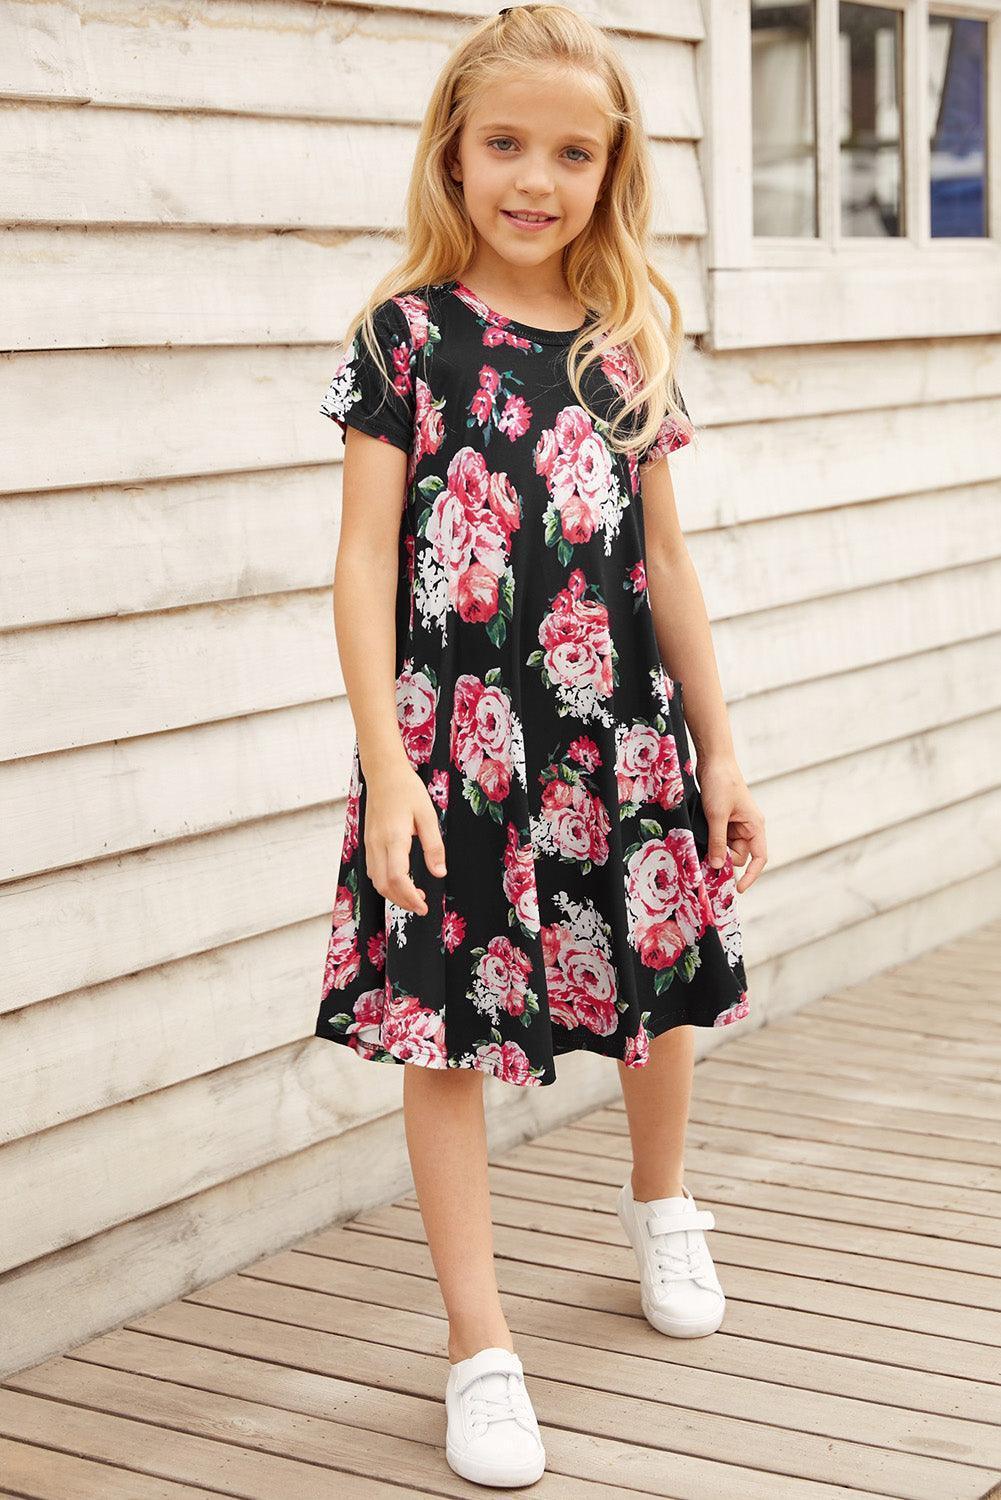 Girls Garden Inspired Floral Dress With Pockets - MXSTUDIO.COM